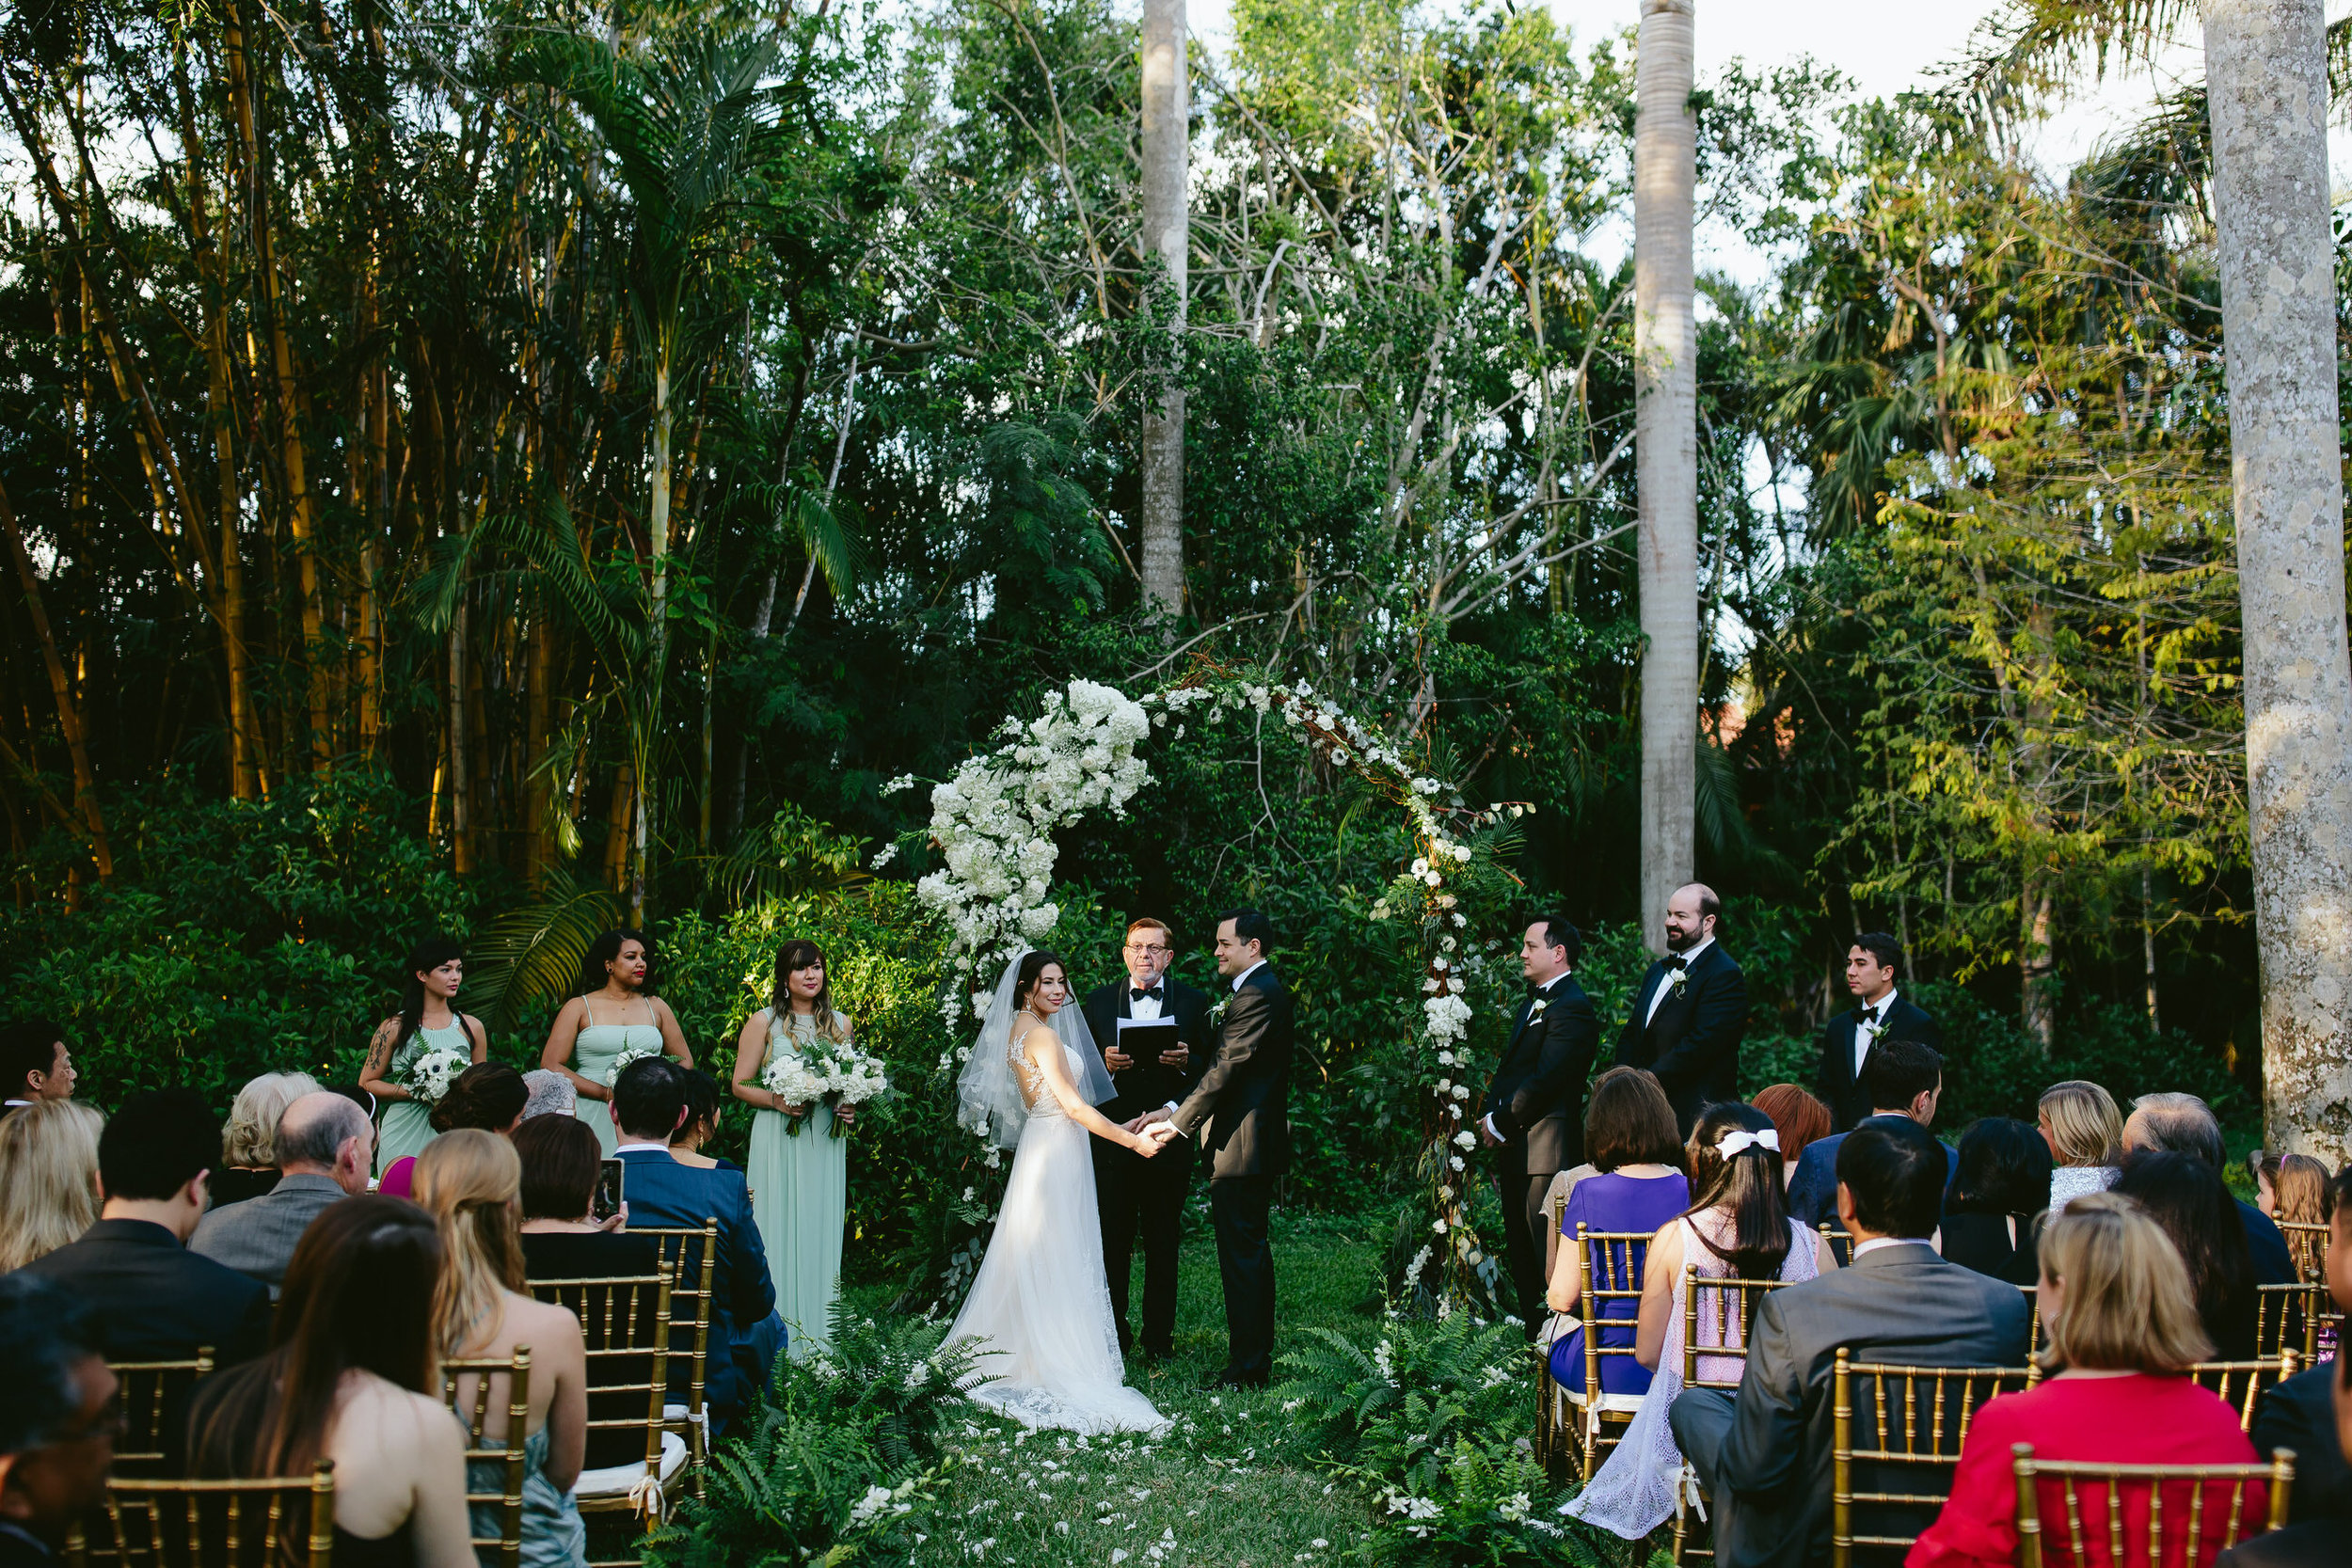 twilight_inspired_backyard_wedding_elegant_ethereal_ceremony_luxury_best_weddings_photography_tiny_house_photo.jpg